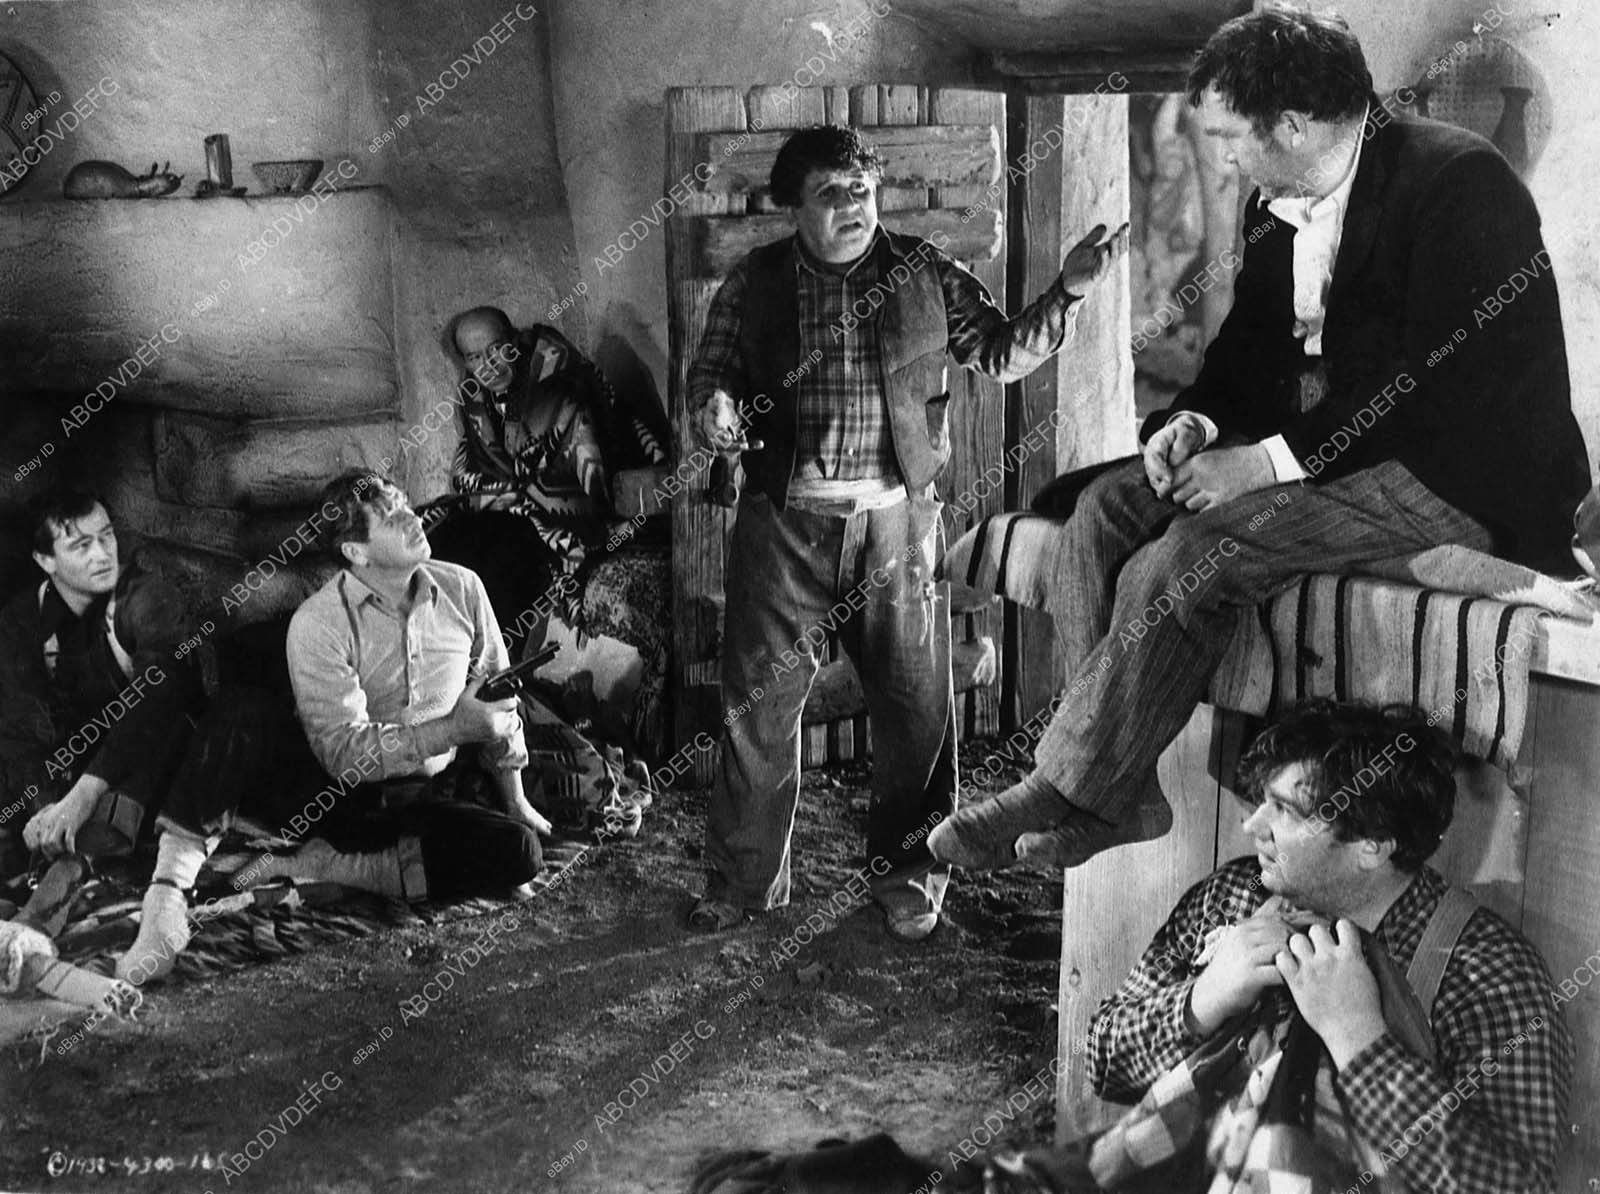 JOHN WAYNE IN THE 1939 FILM "STAGECOACH" 8X10 PUBLICITY PHOTO MW436 